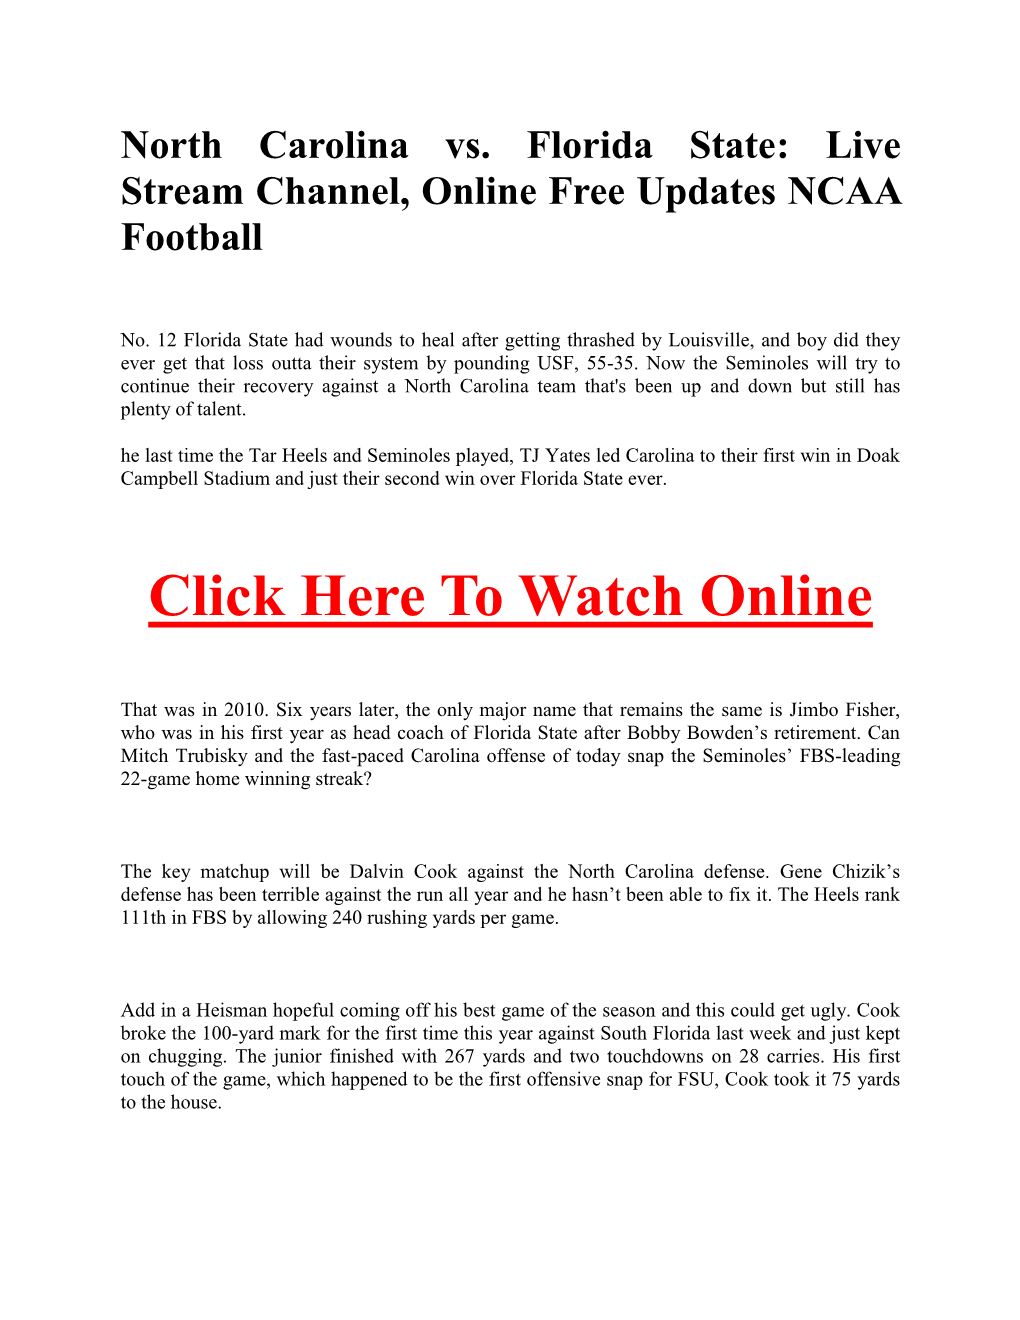 North Carolina Vs. Florida State Live Stream Channel, Online Free